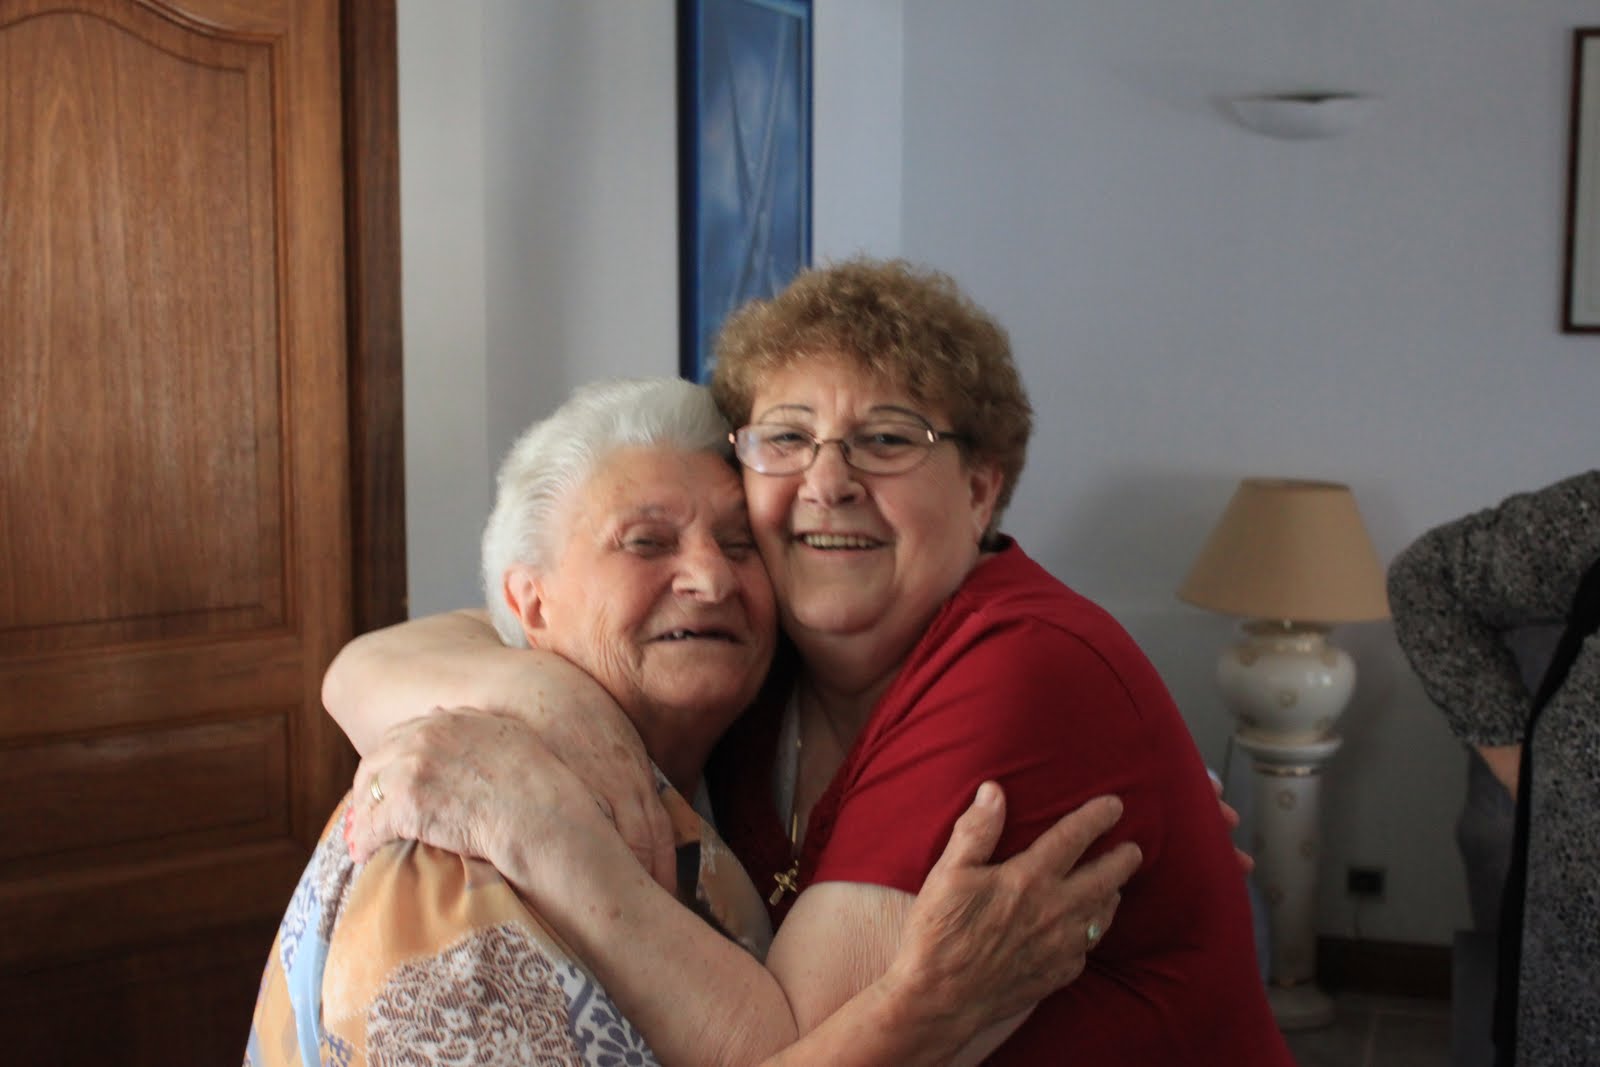 Grandma hugs are the best hugs